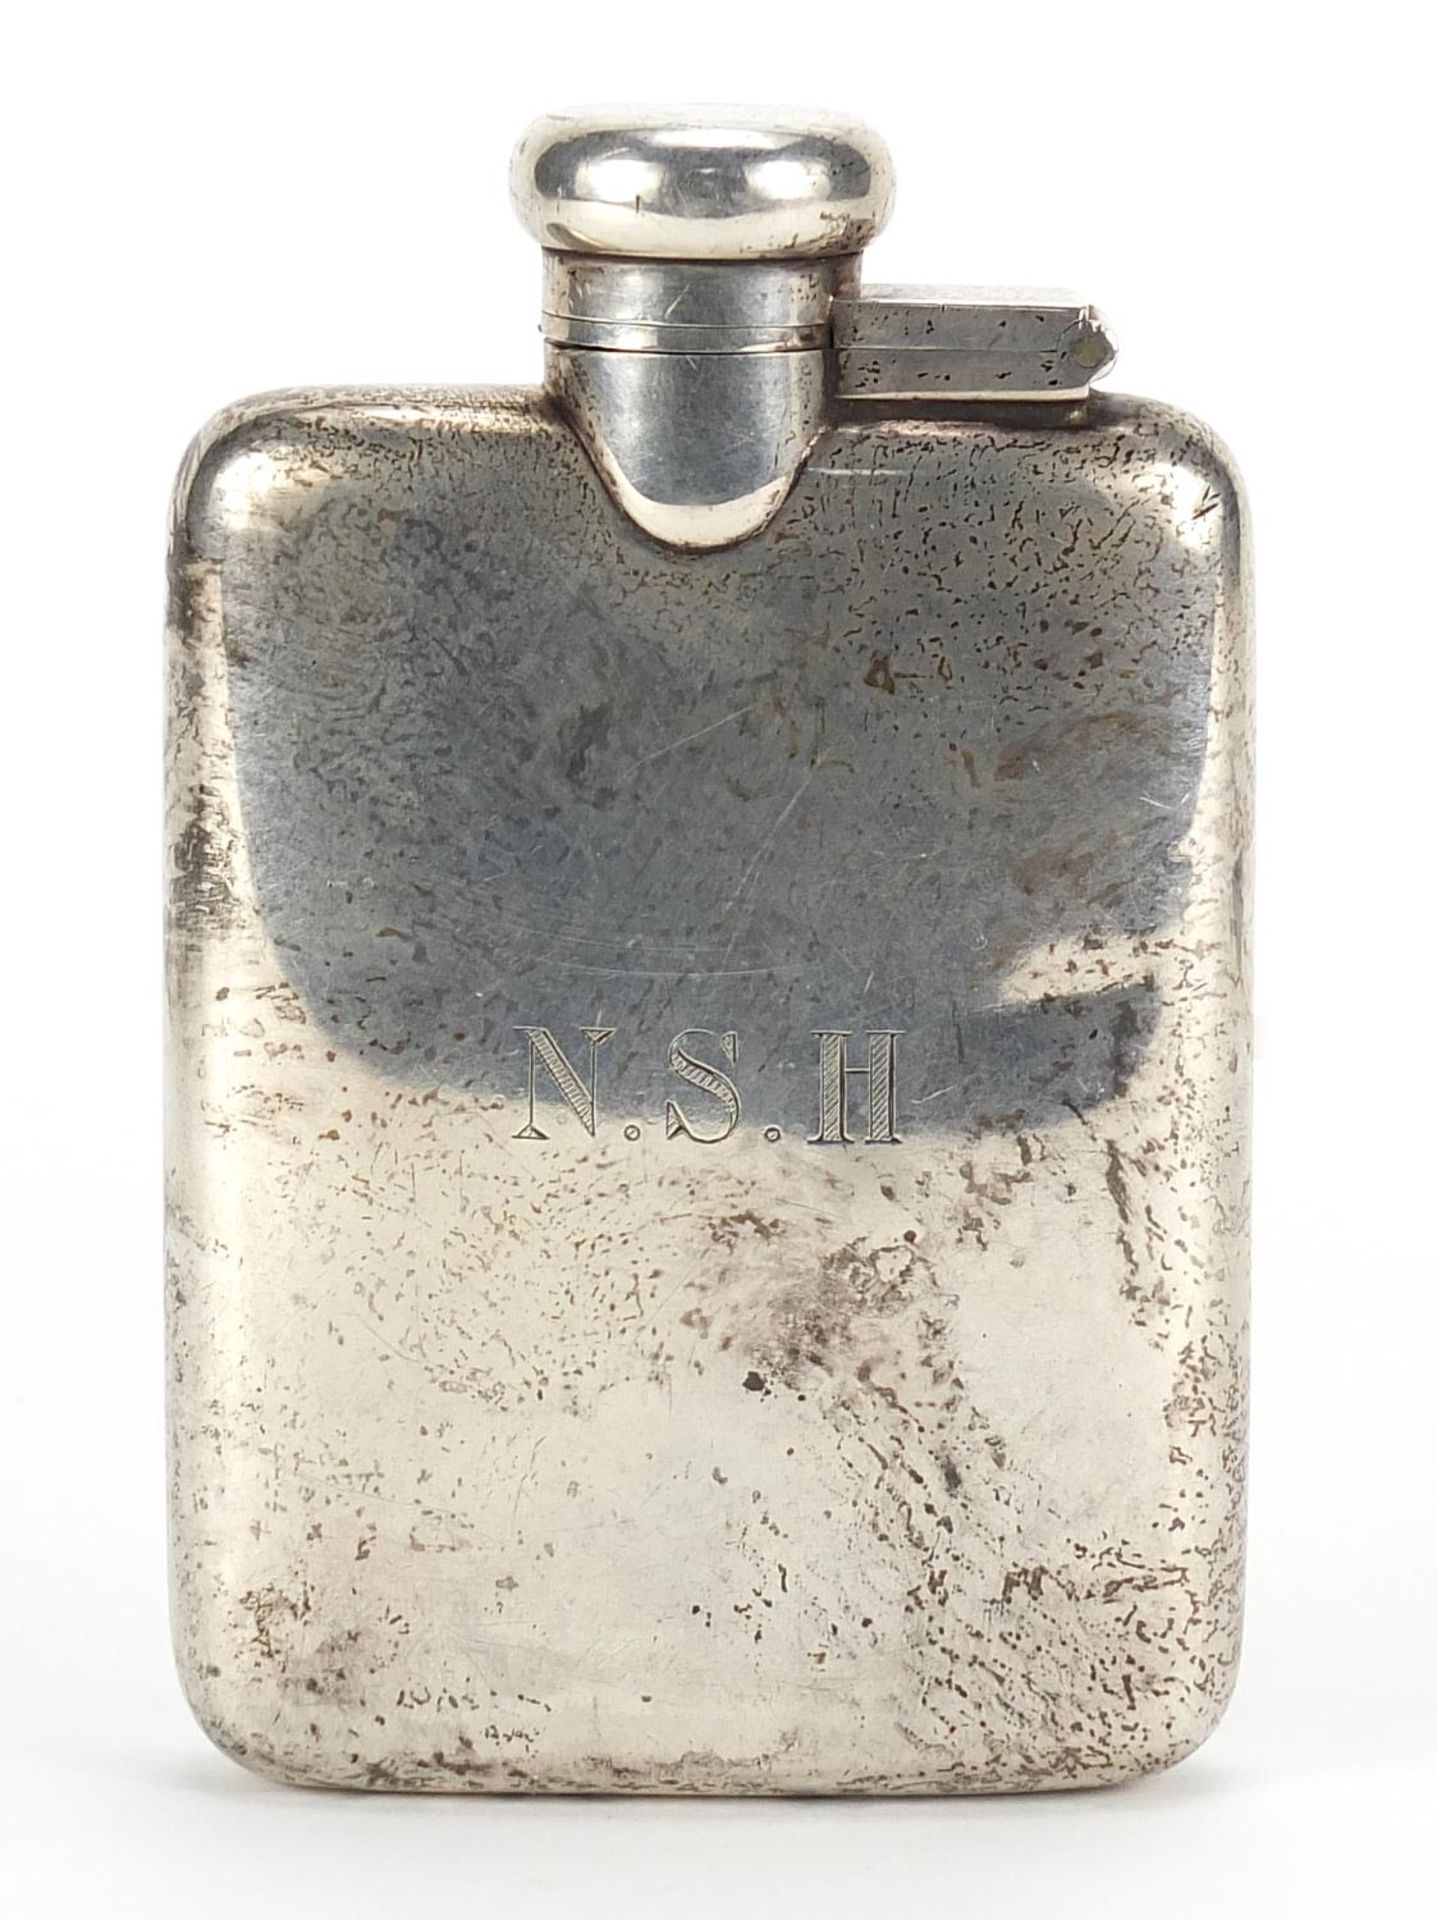 A & J Zimmerman Ltd, George V silver hip flask with bayonet fitting lid, Birmingham 1924, 11cm high,